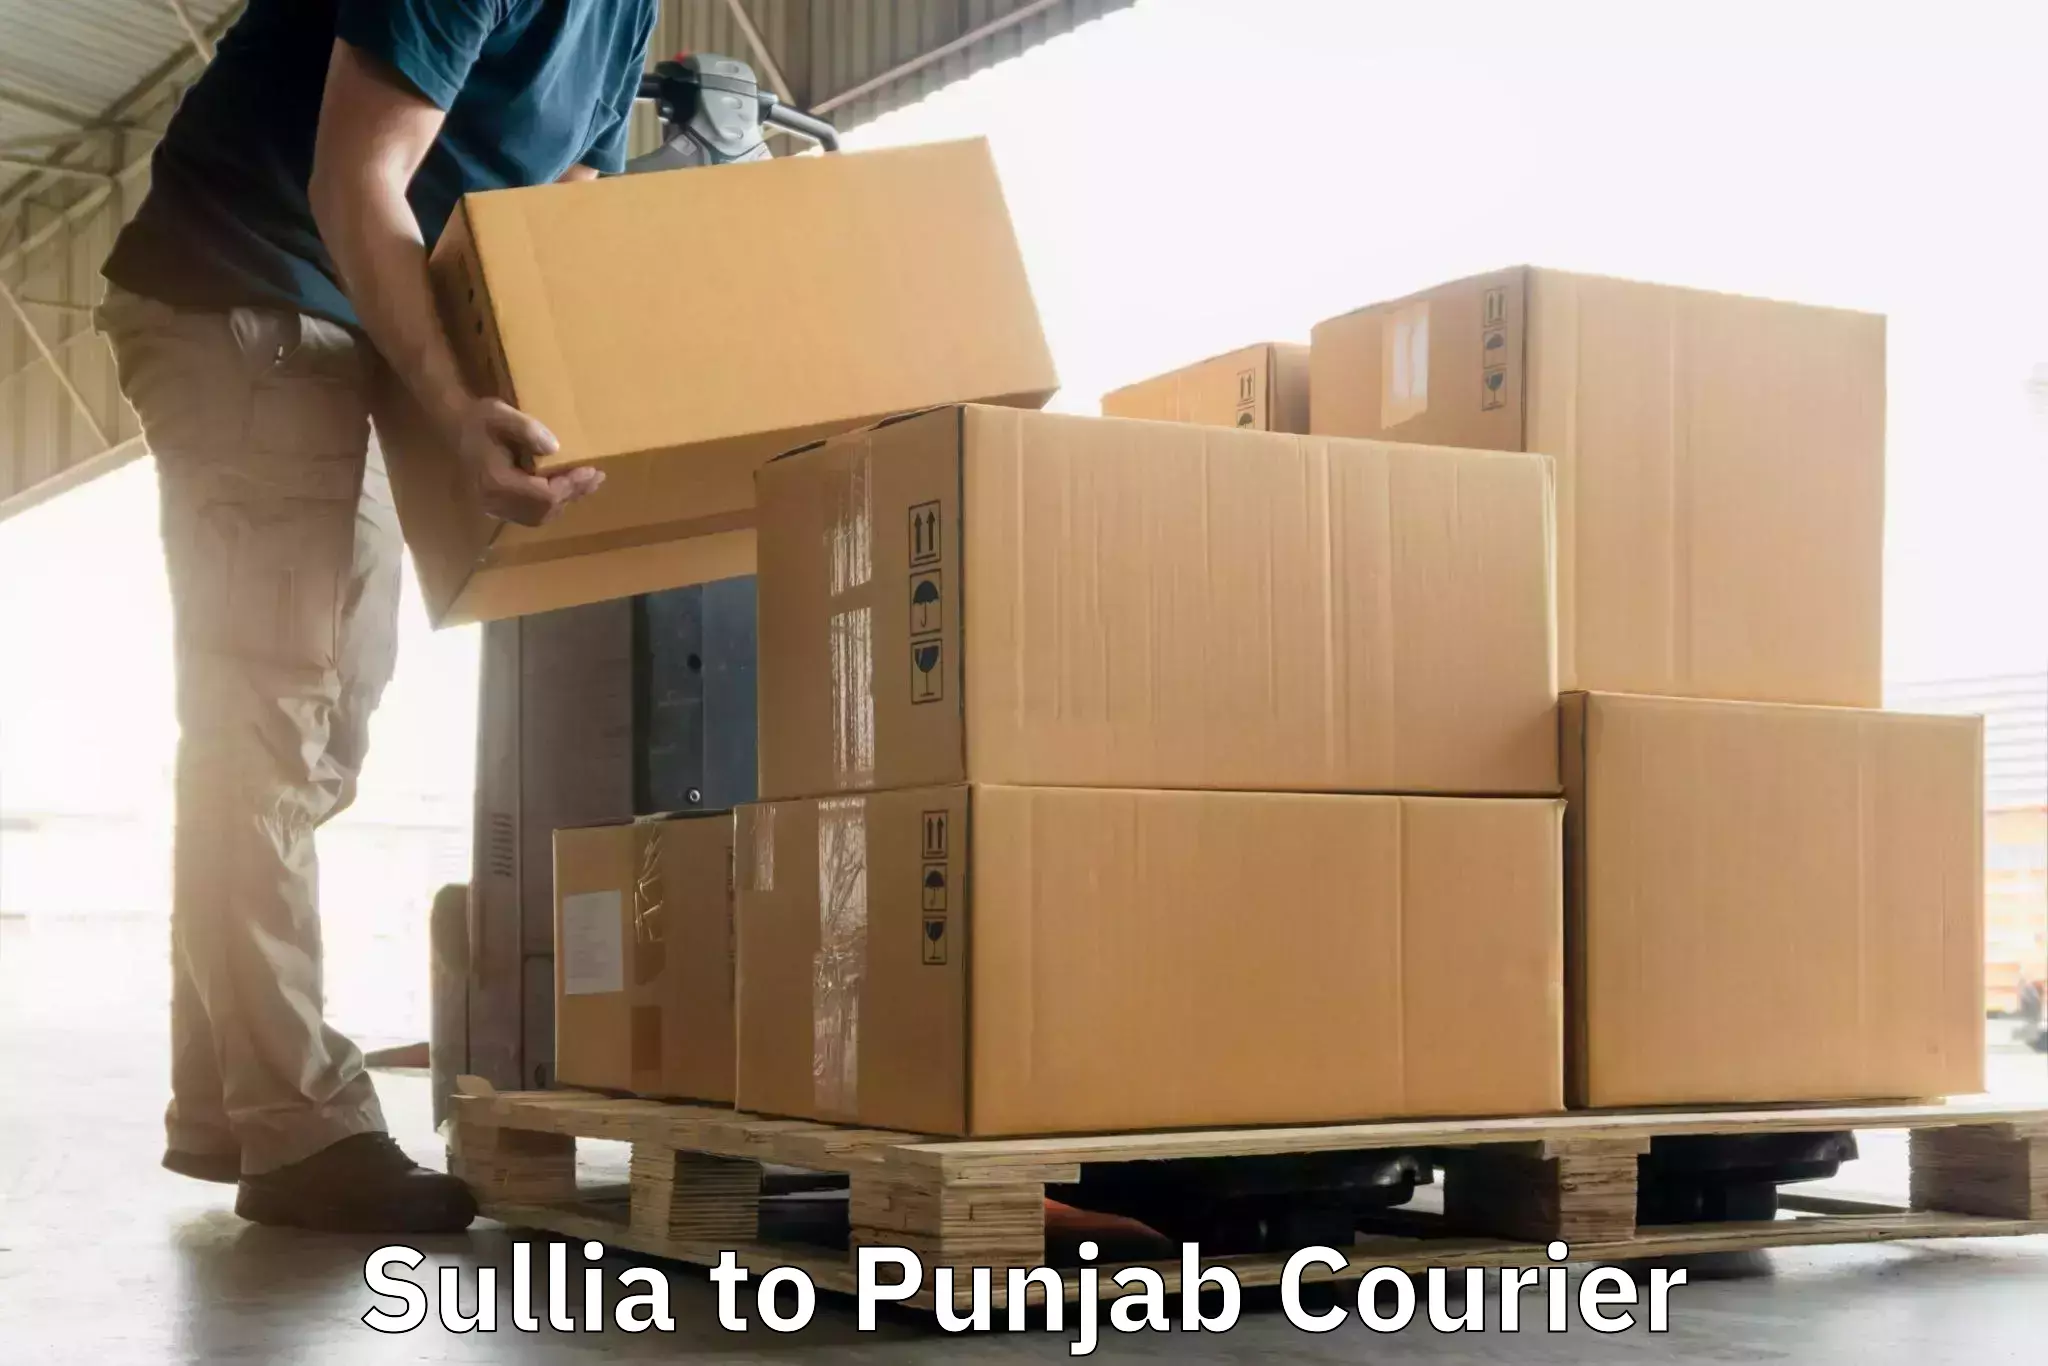 Courier service comparison Sullia to Bhadaur